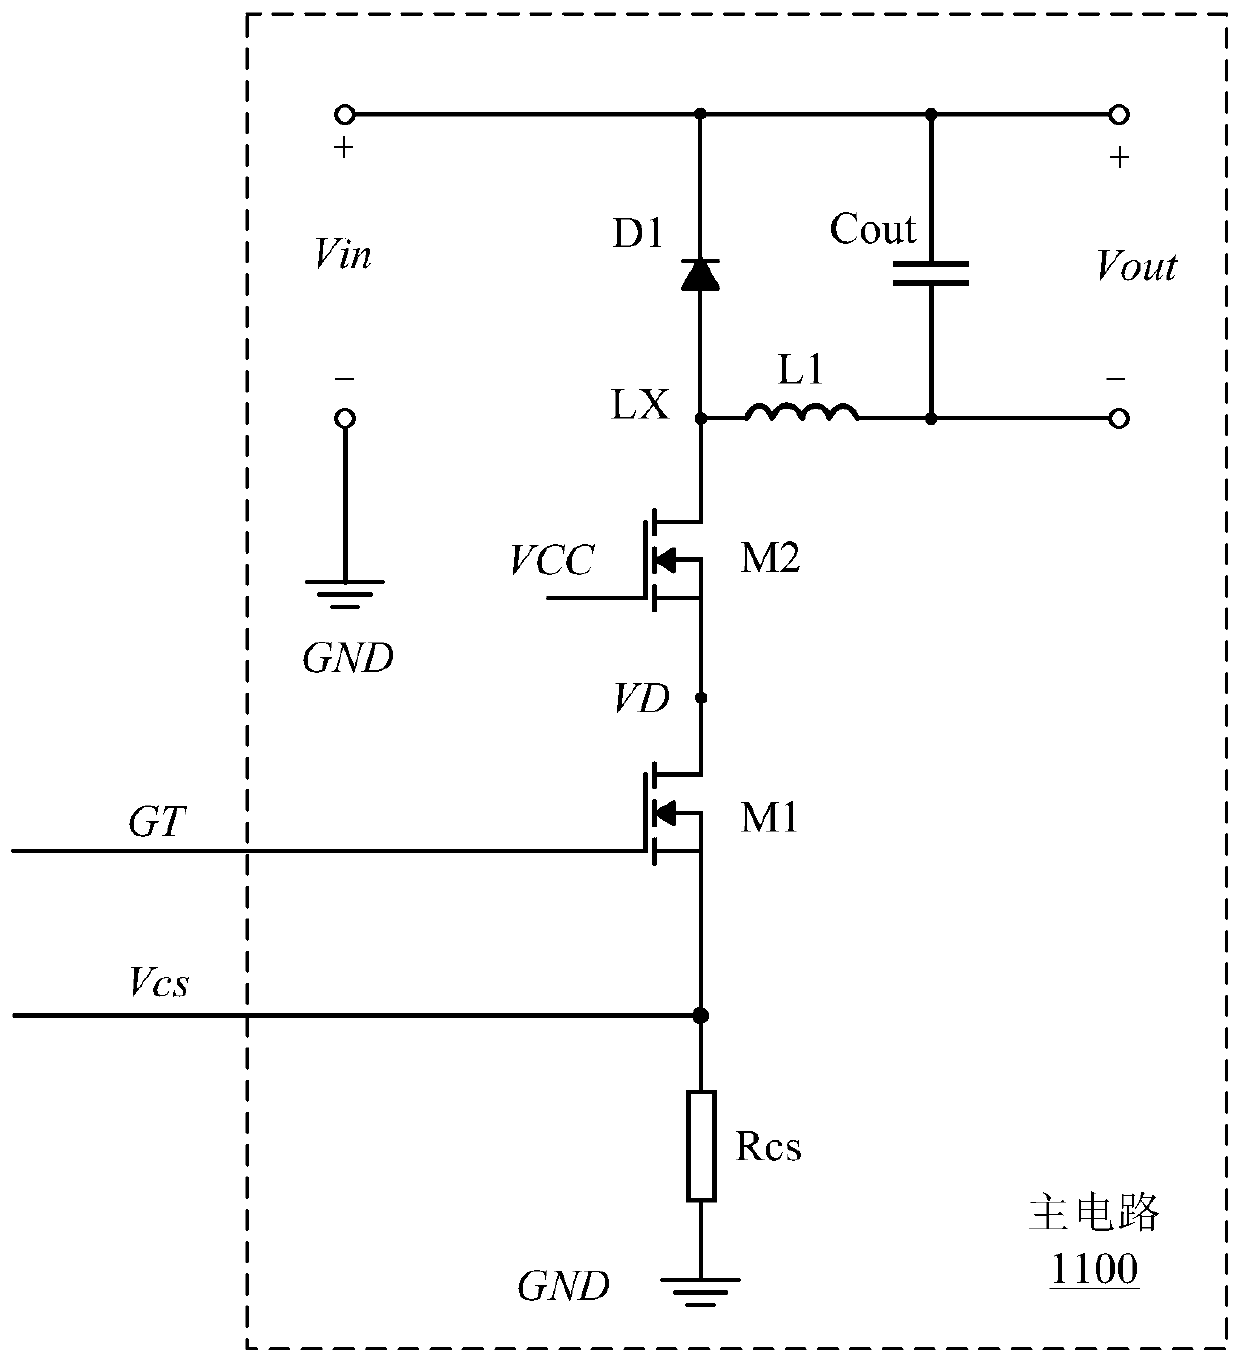 Zero-crossing detection circuit, zero-crossing detection method and switching power supply circuit